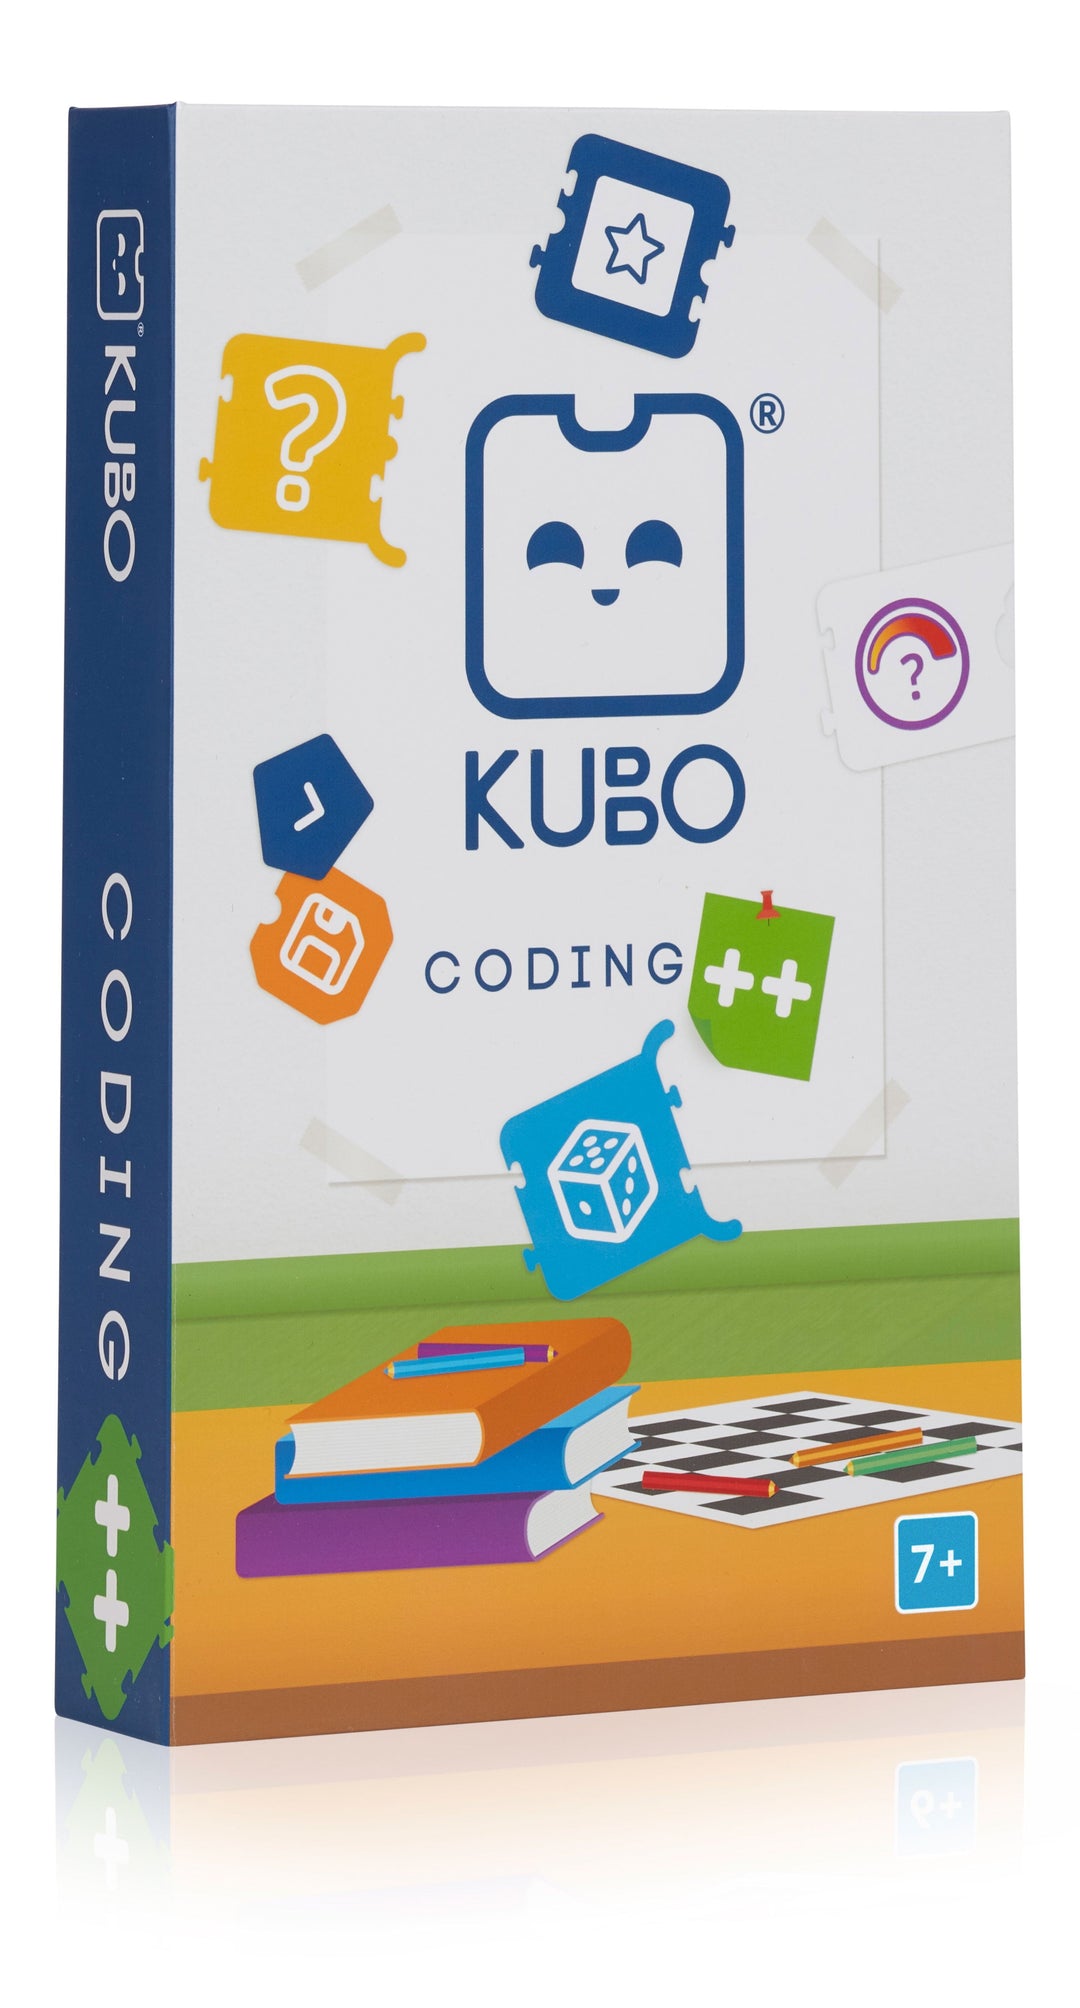 KUBO Coding++ Set - KUBO - STEMfinity